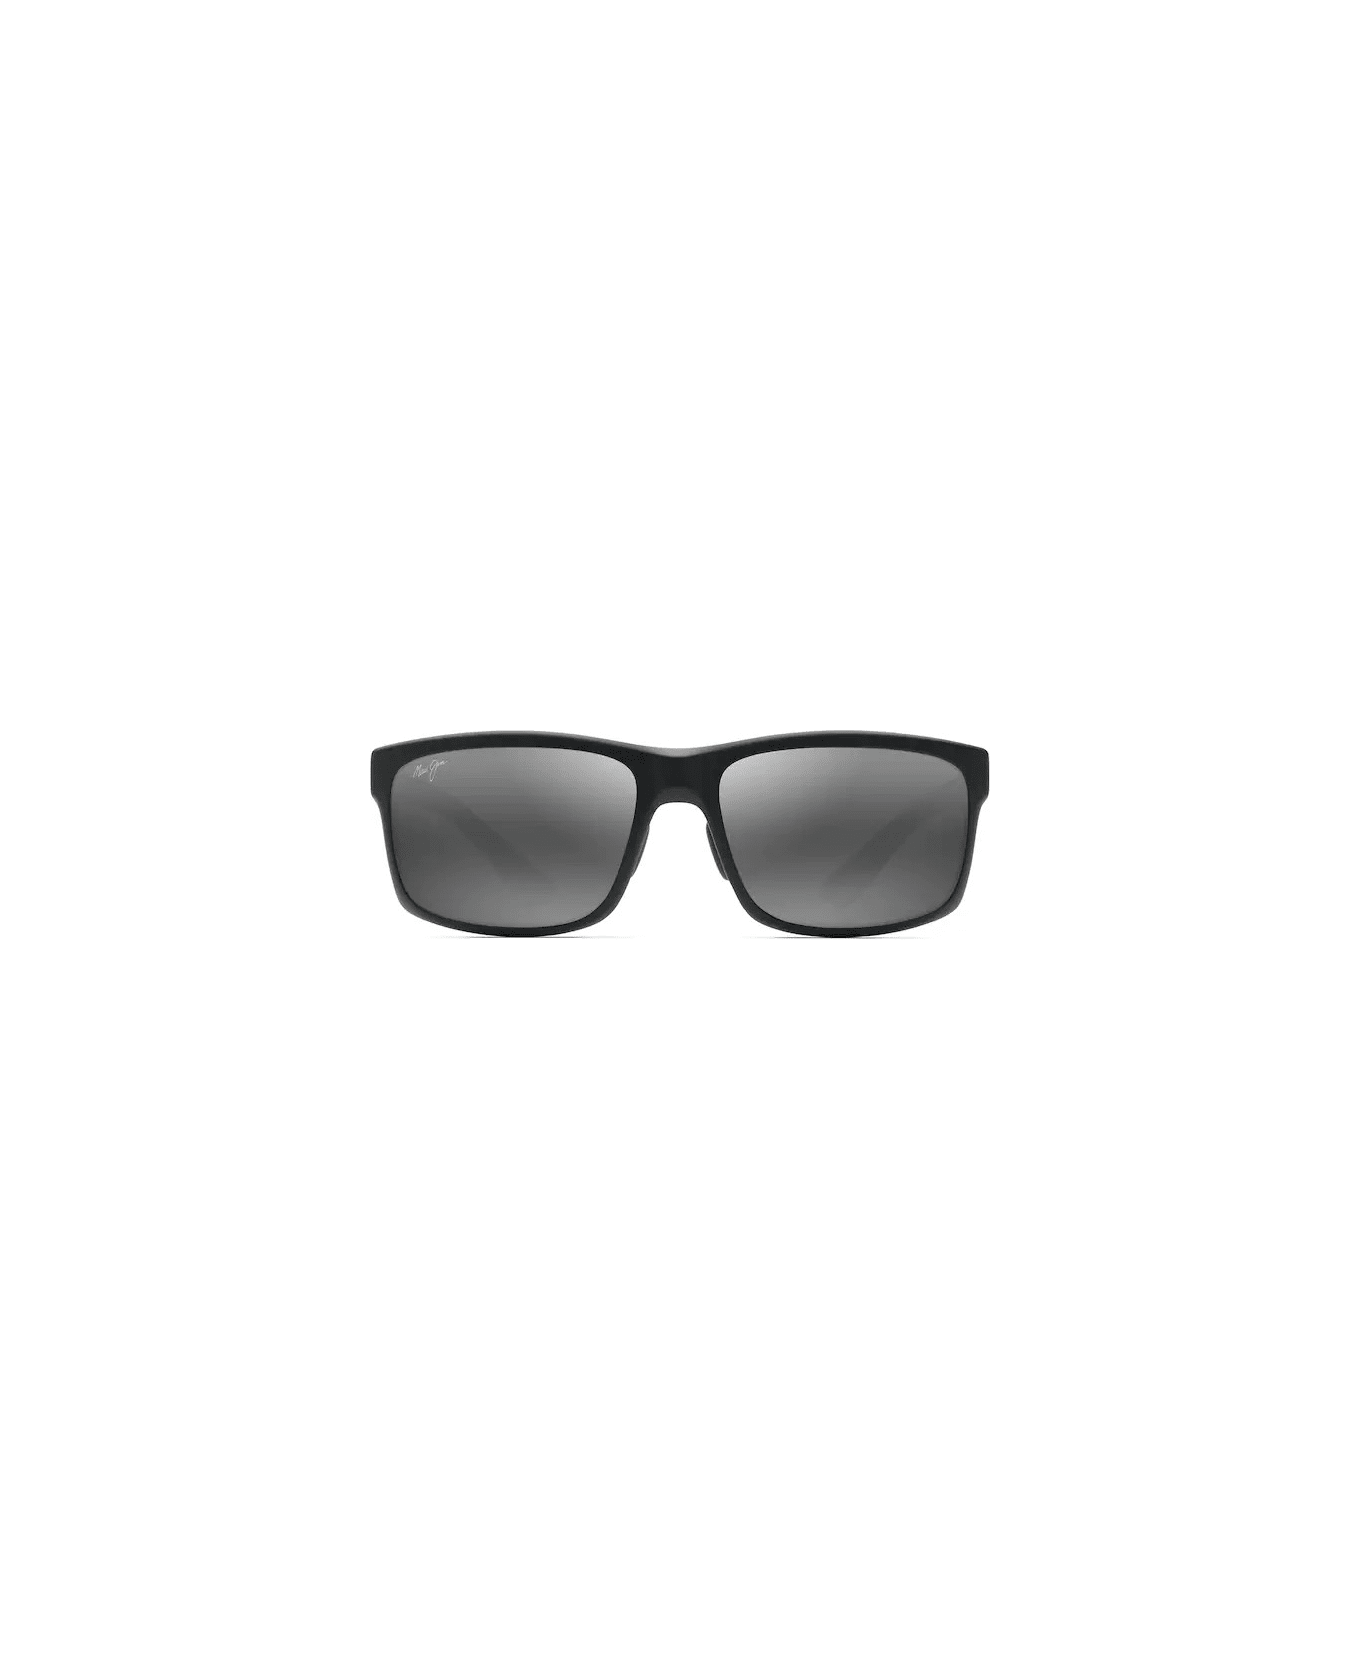 Maui Jim MJ439-2M Sunglasses - Nero サングラス